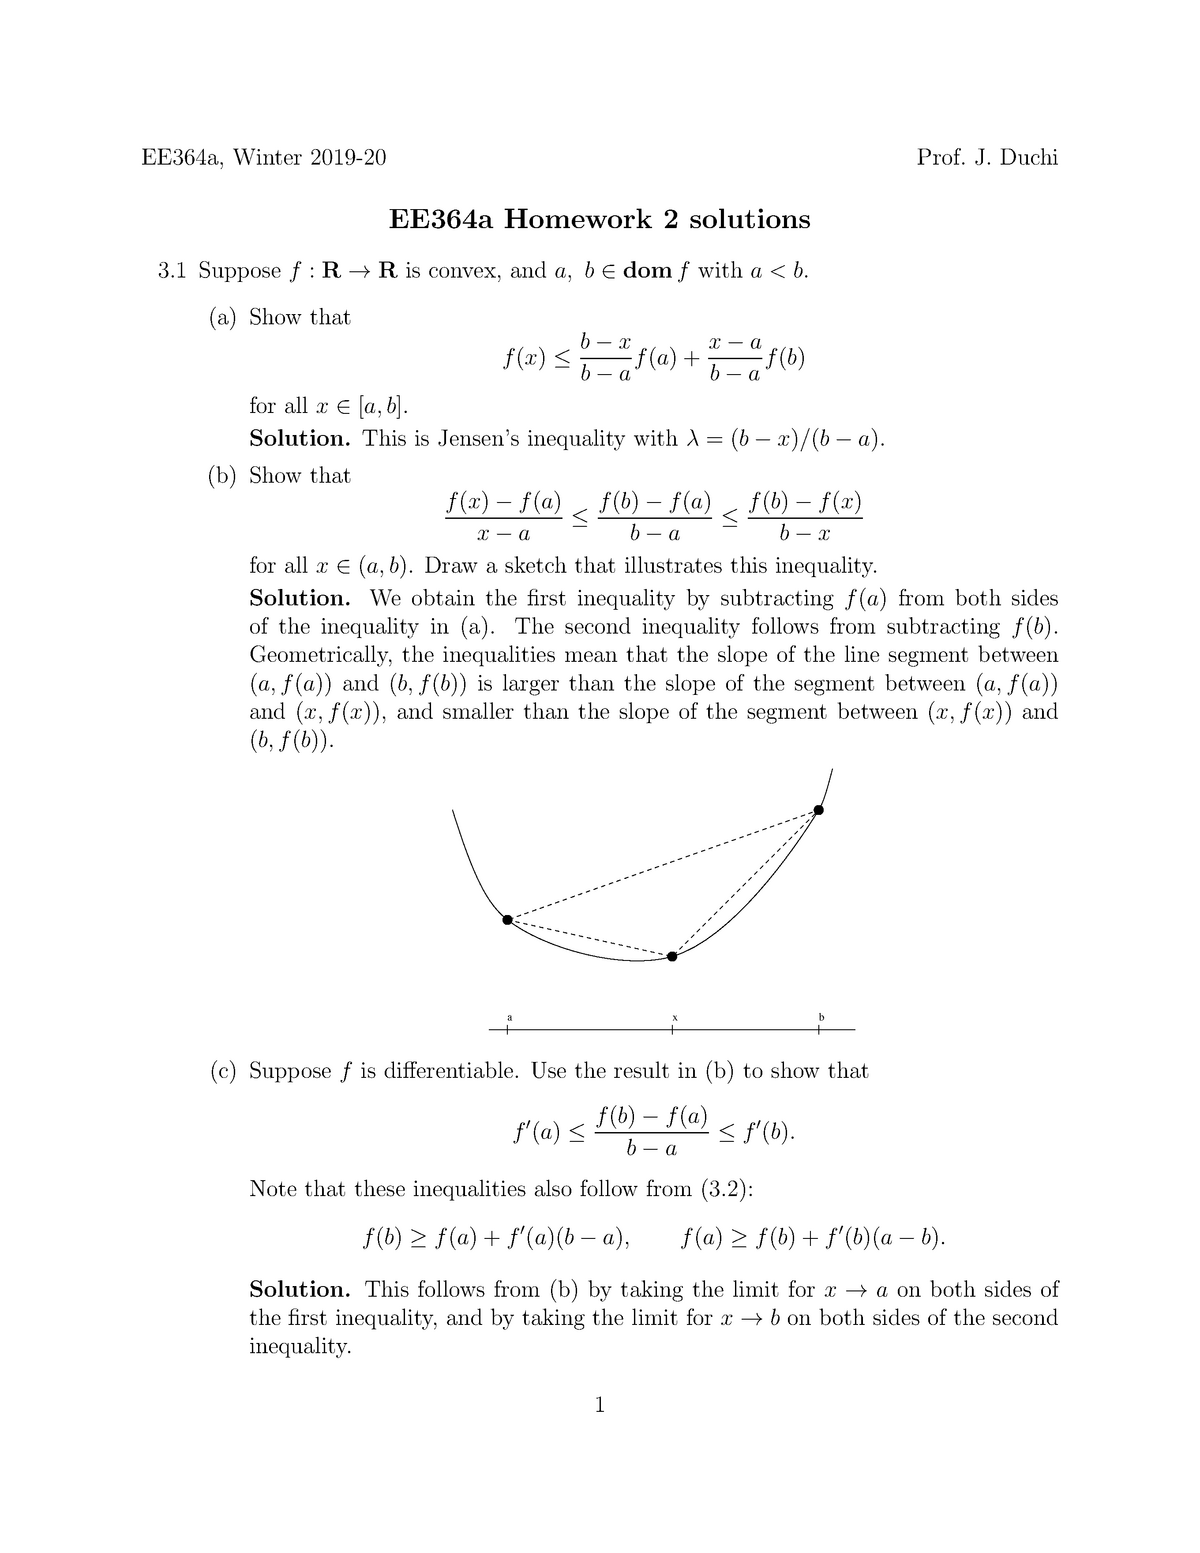 ee364a homework 2 solutions